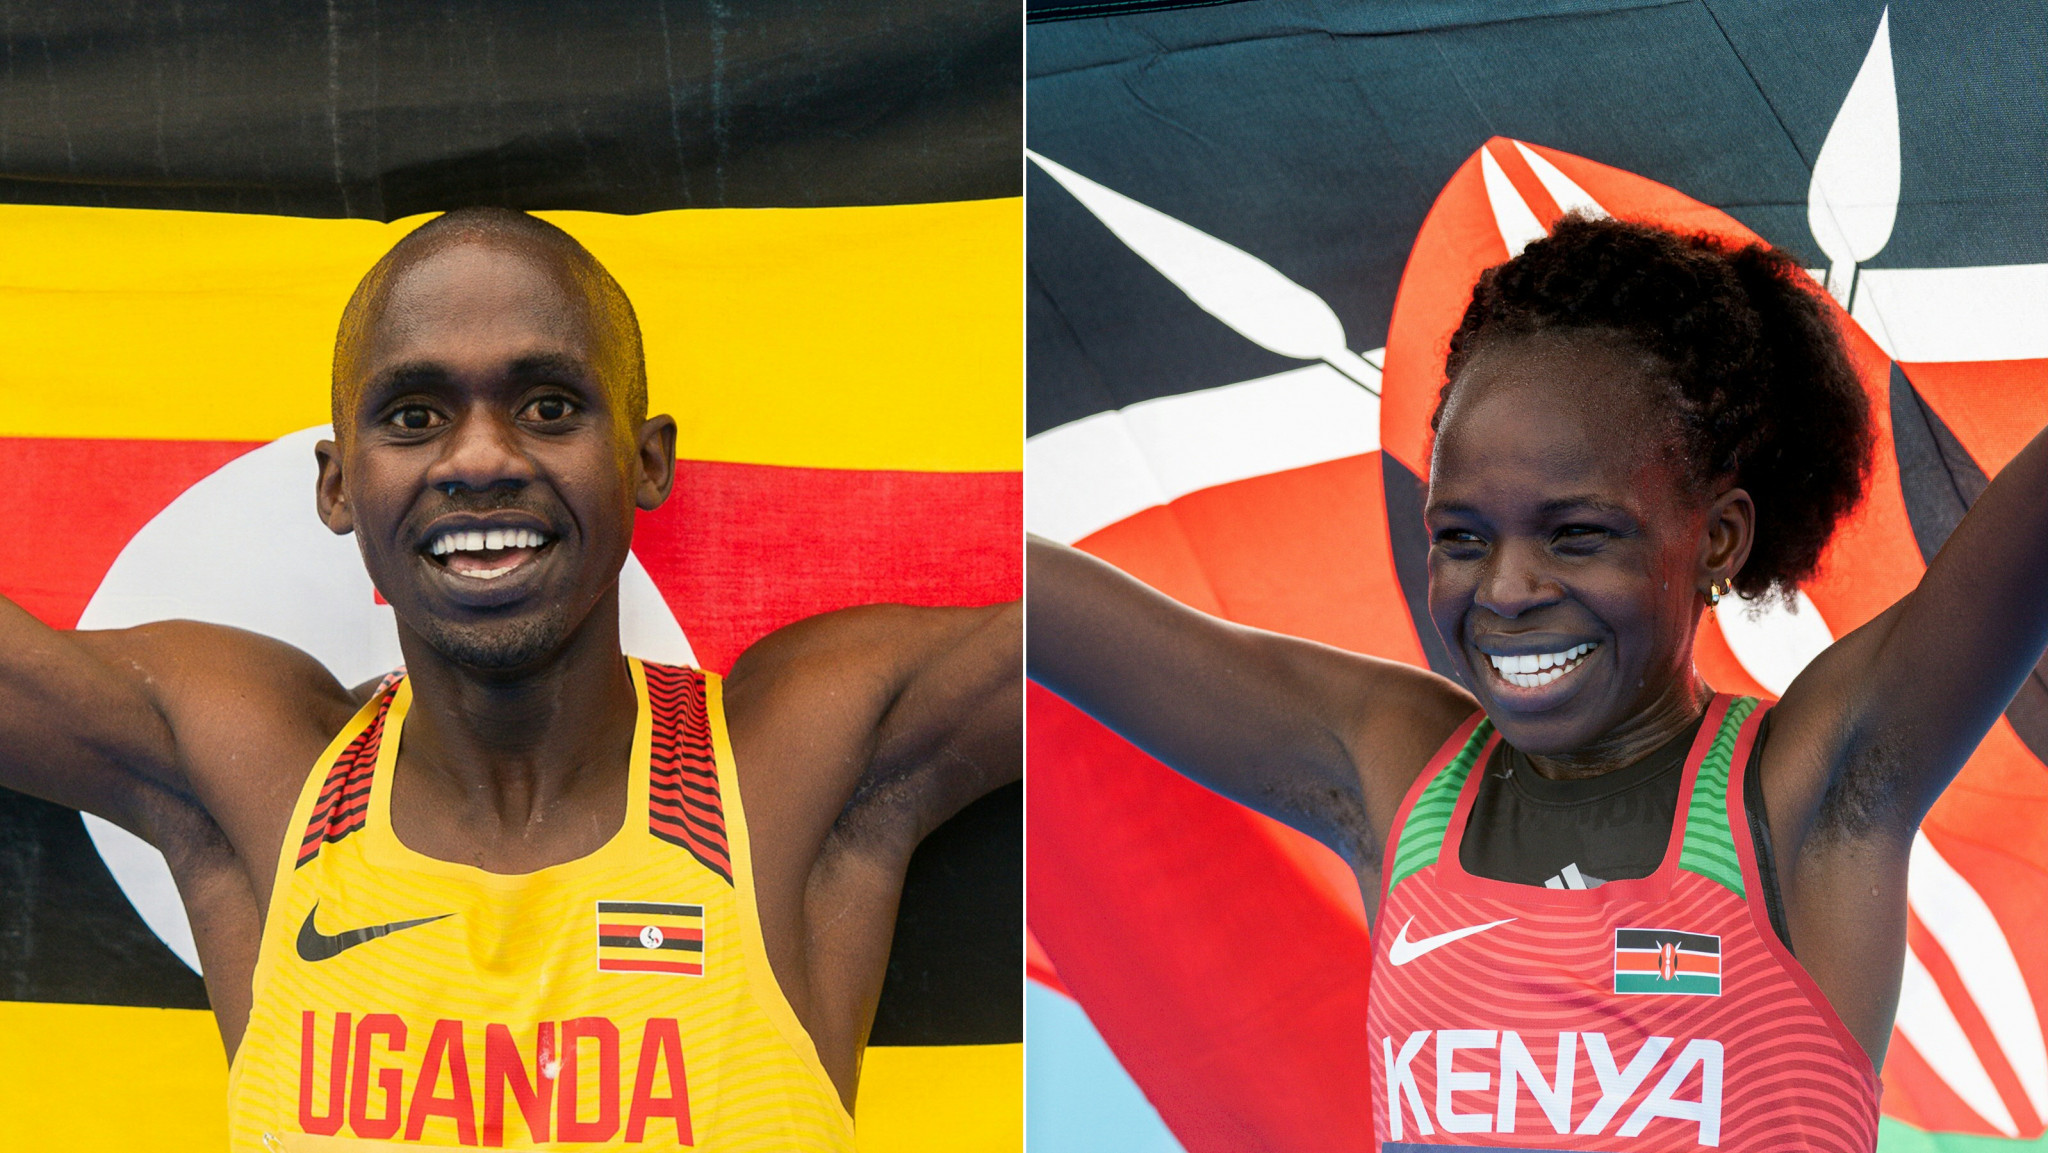 Uganda's Jacob Kiplimo and Kenya's Peres Jepchirchir, right, celebrate winning the IAAF World Half Marathon Championships in Gdynia ©Getty Images